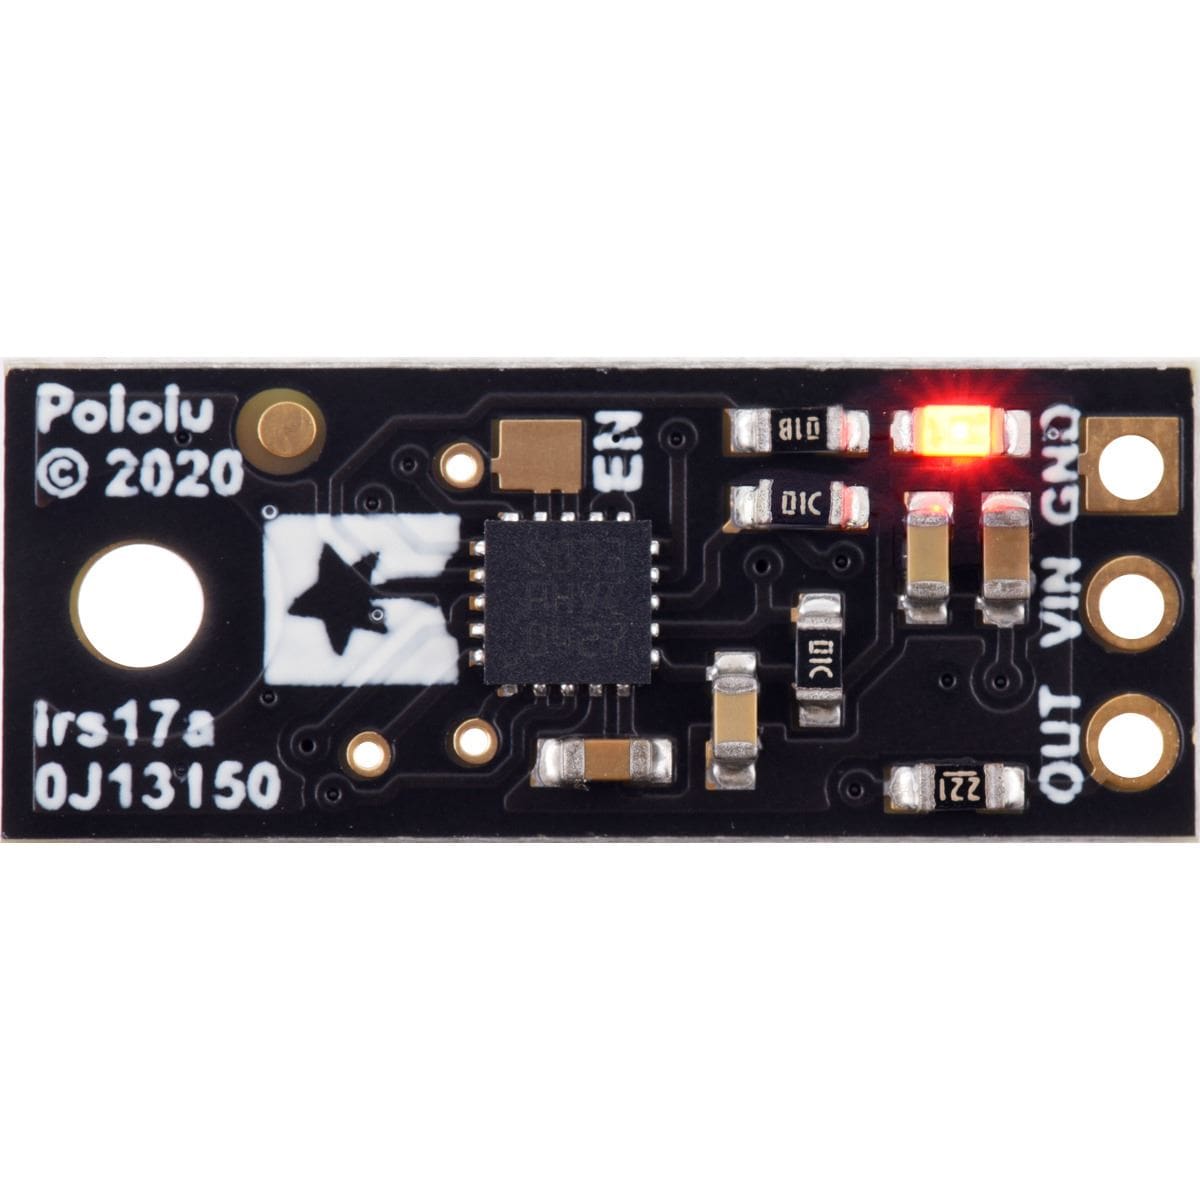 Pololu Digital Distance Sensor 200cm - The Pi Hut